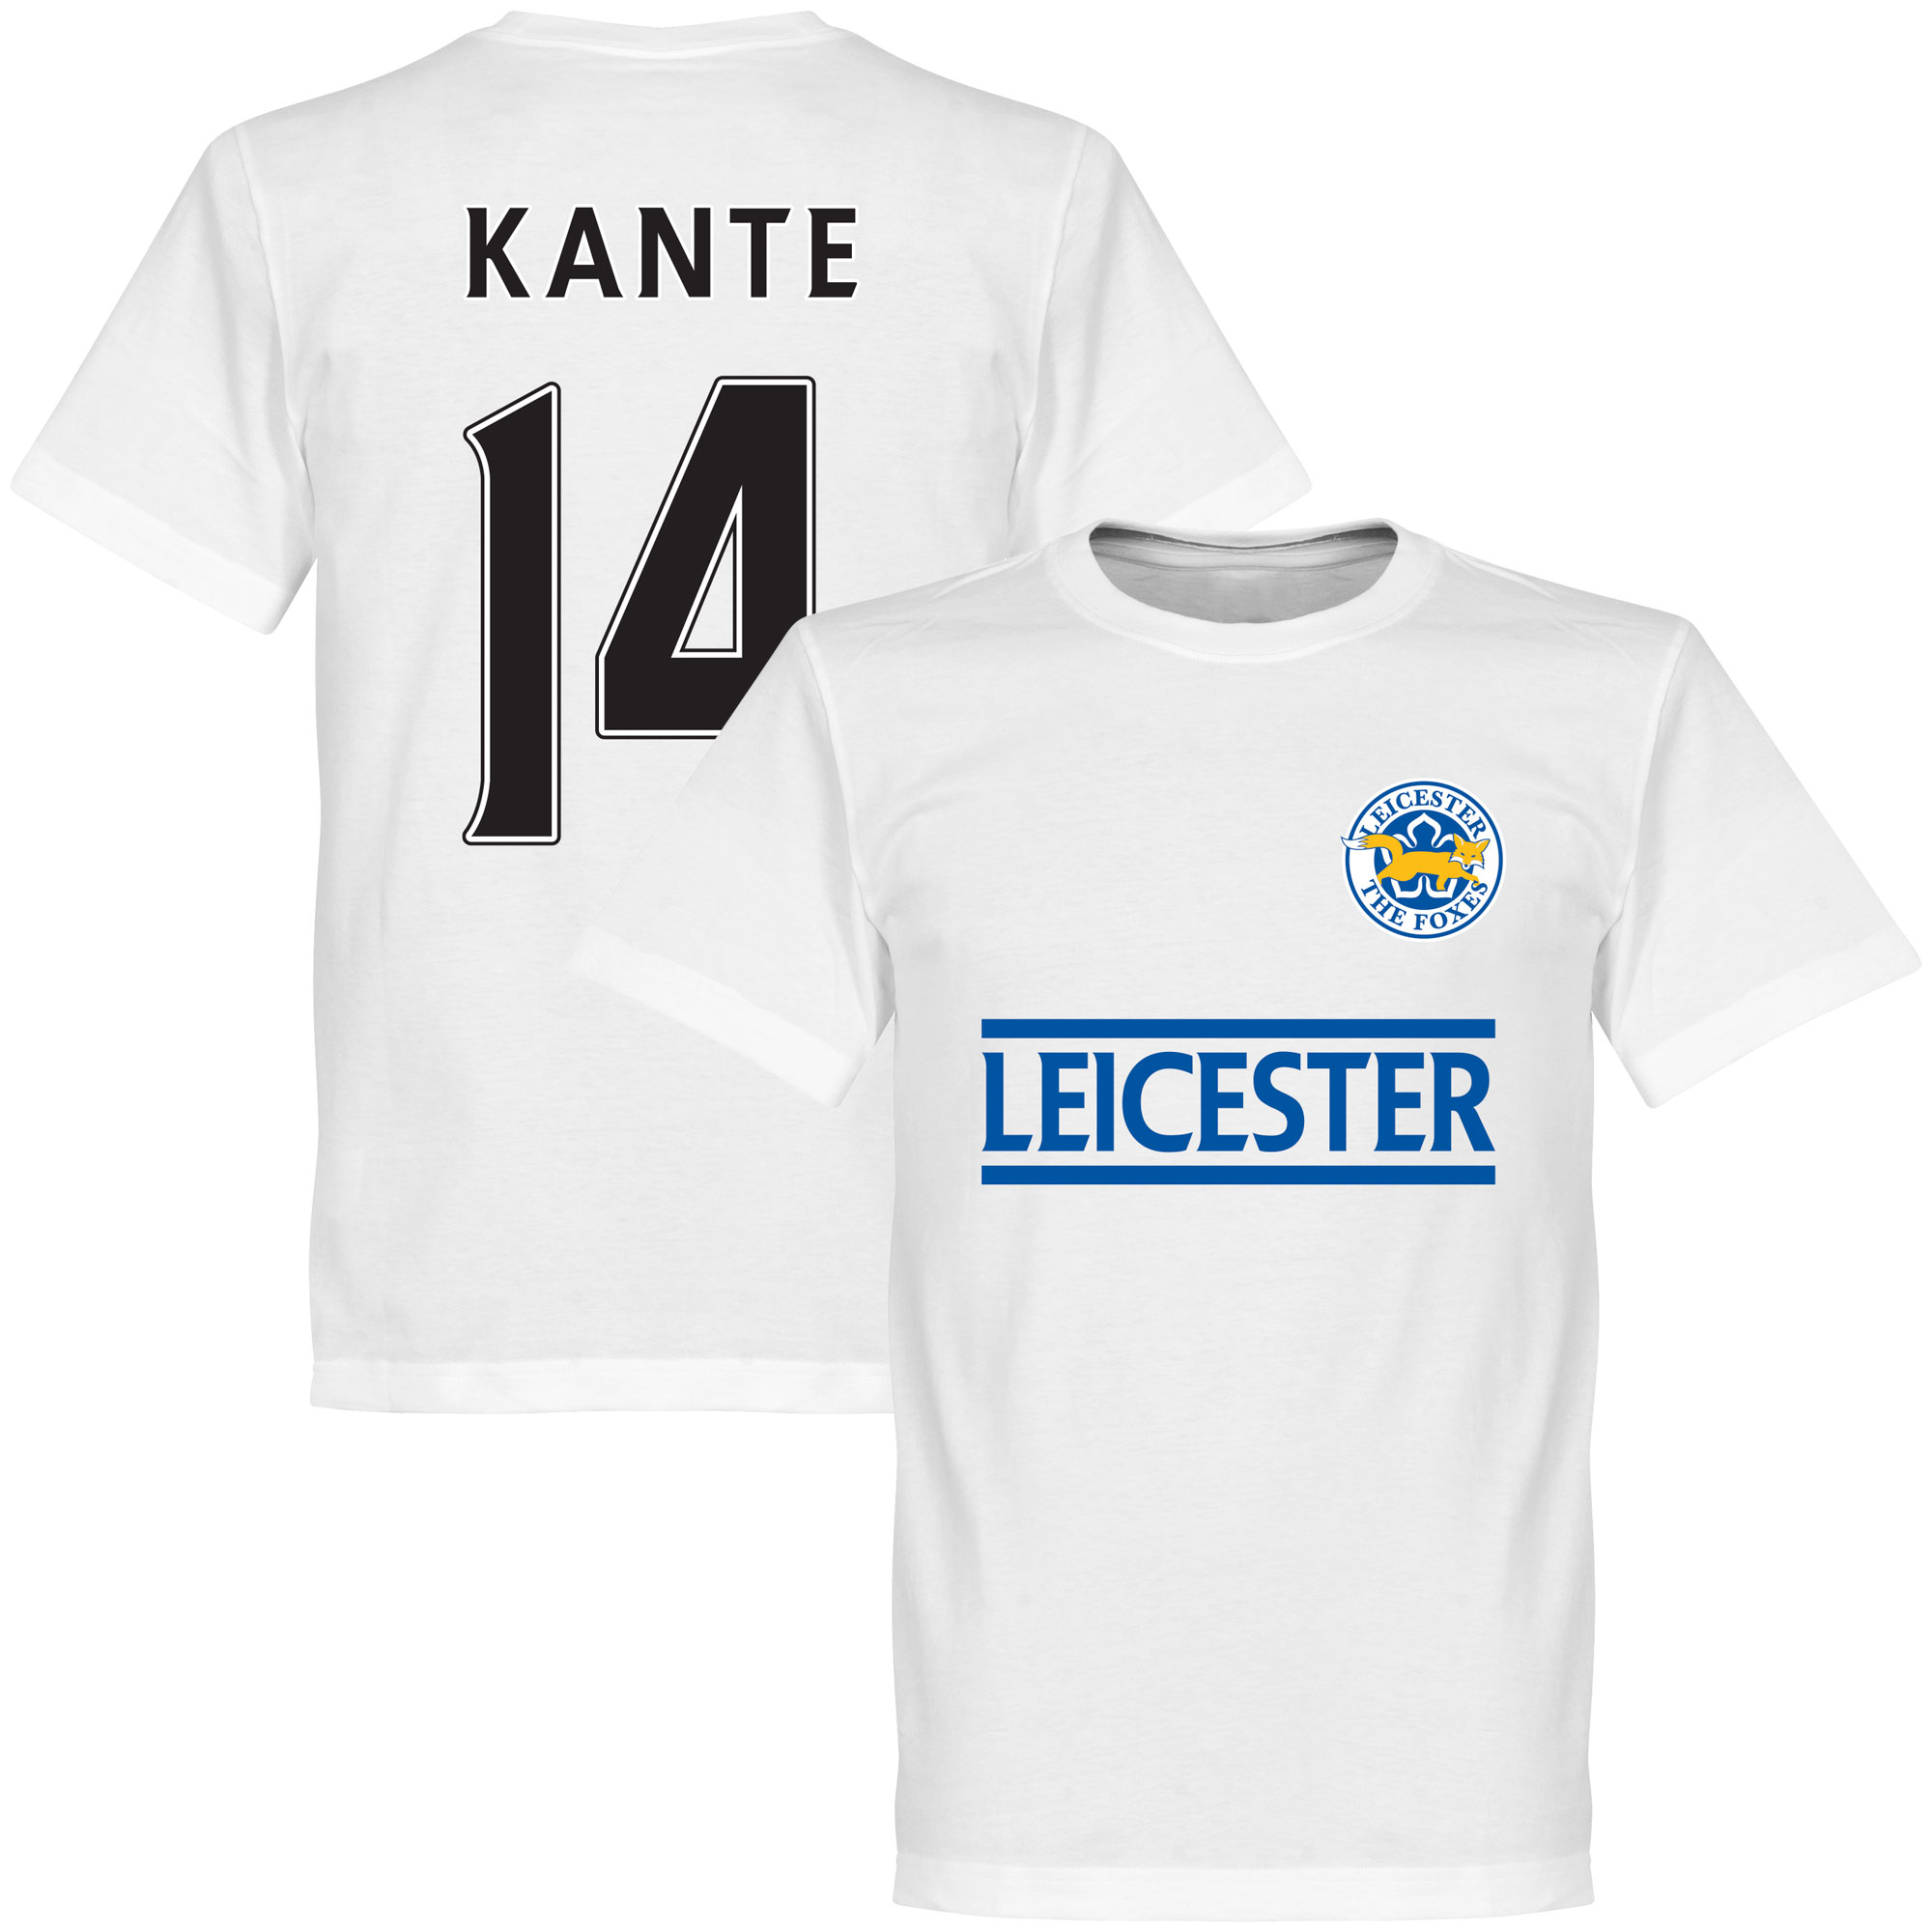 Leicester Kante Team T-Shirt